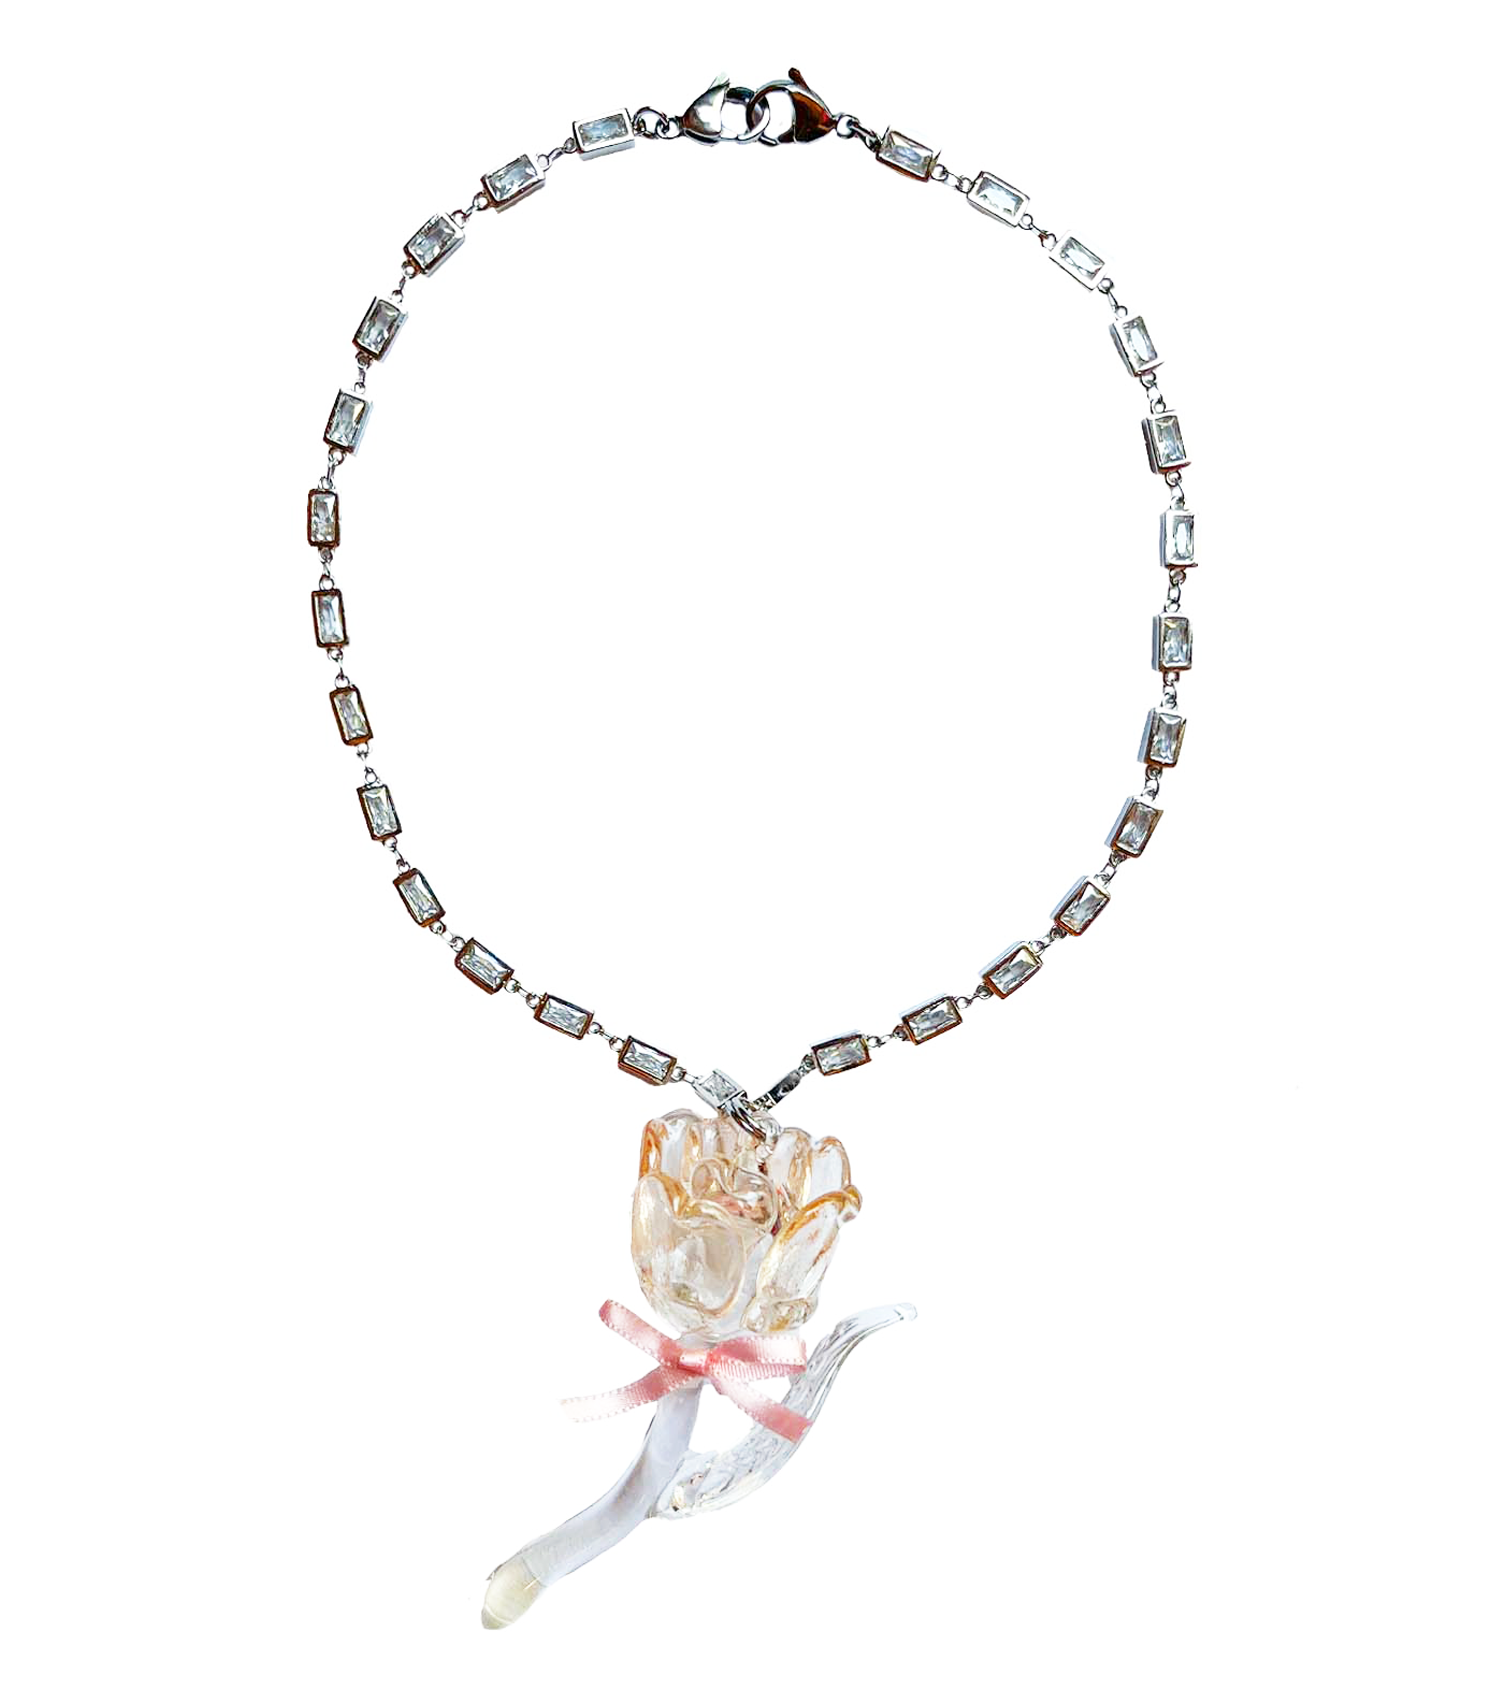 emma pryde, necklace, crystal chain necklace, metal links, rose, glass rose, handmade, rose necklace, statement necklace, Swarovski, Kathleen, Los Angeles